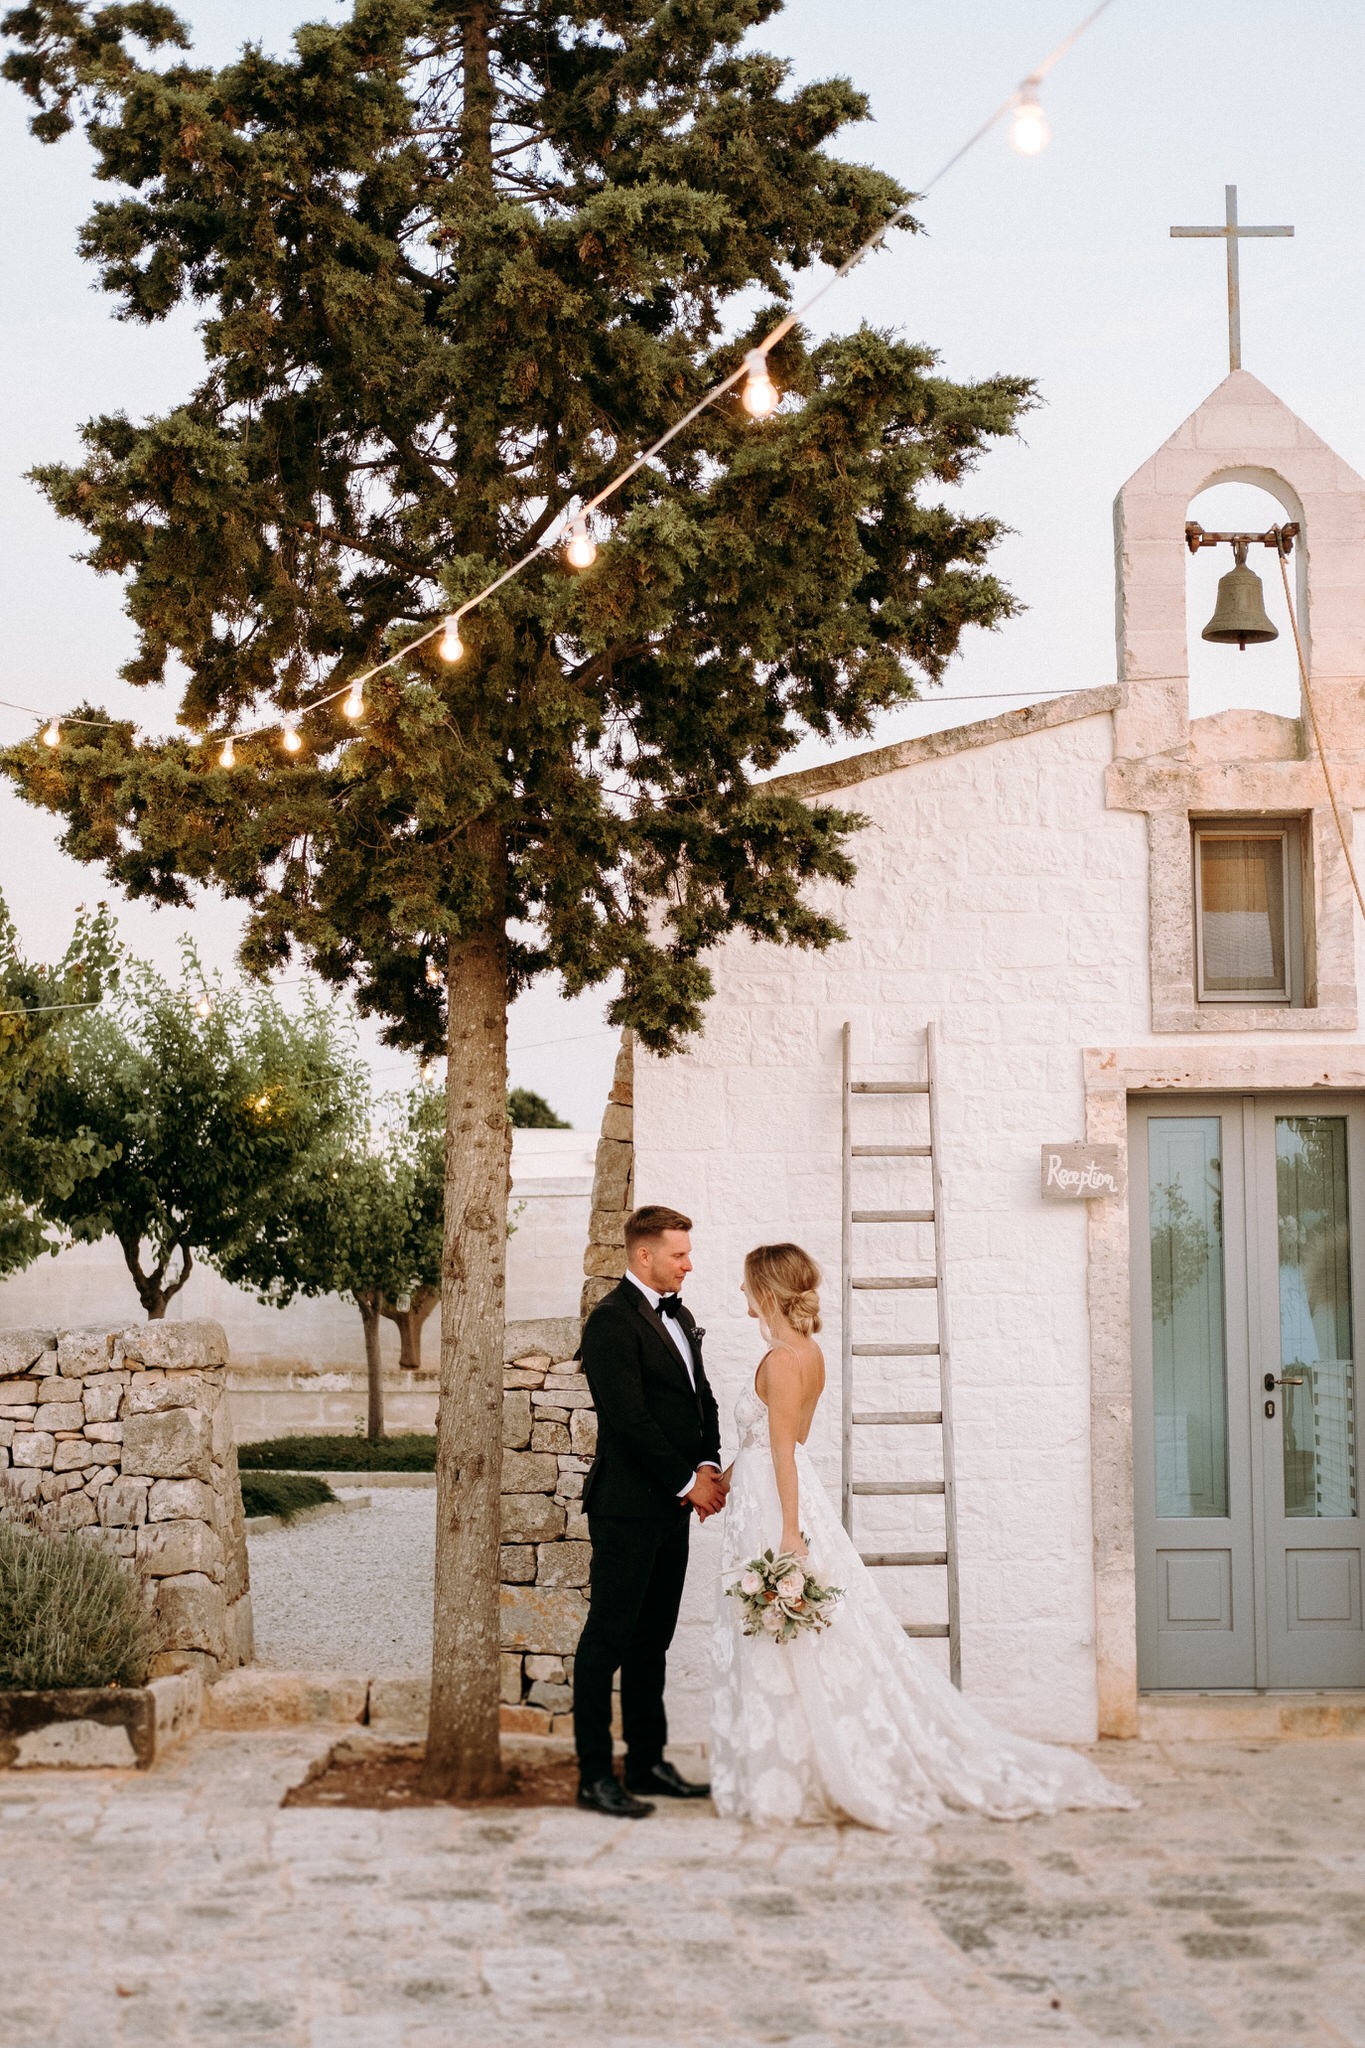 Portratis - Wedding in Apulia, Italy - 35mm